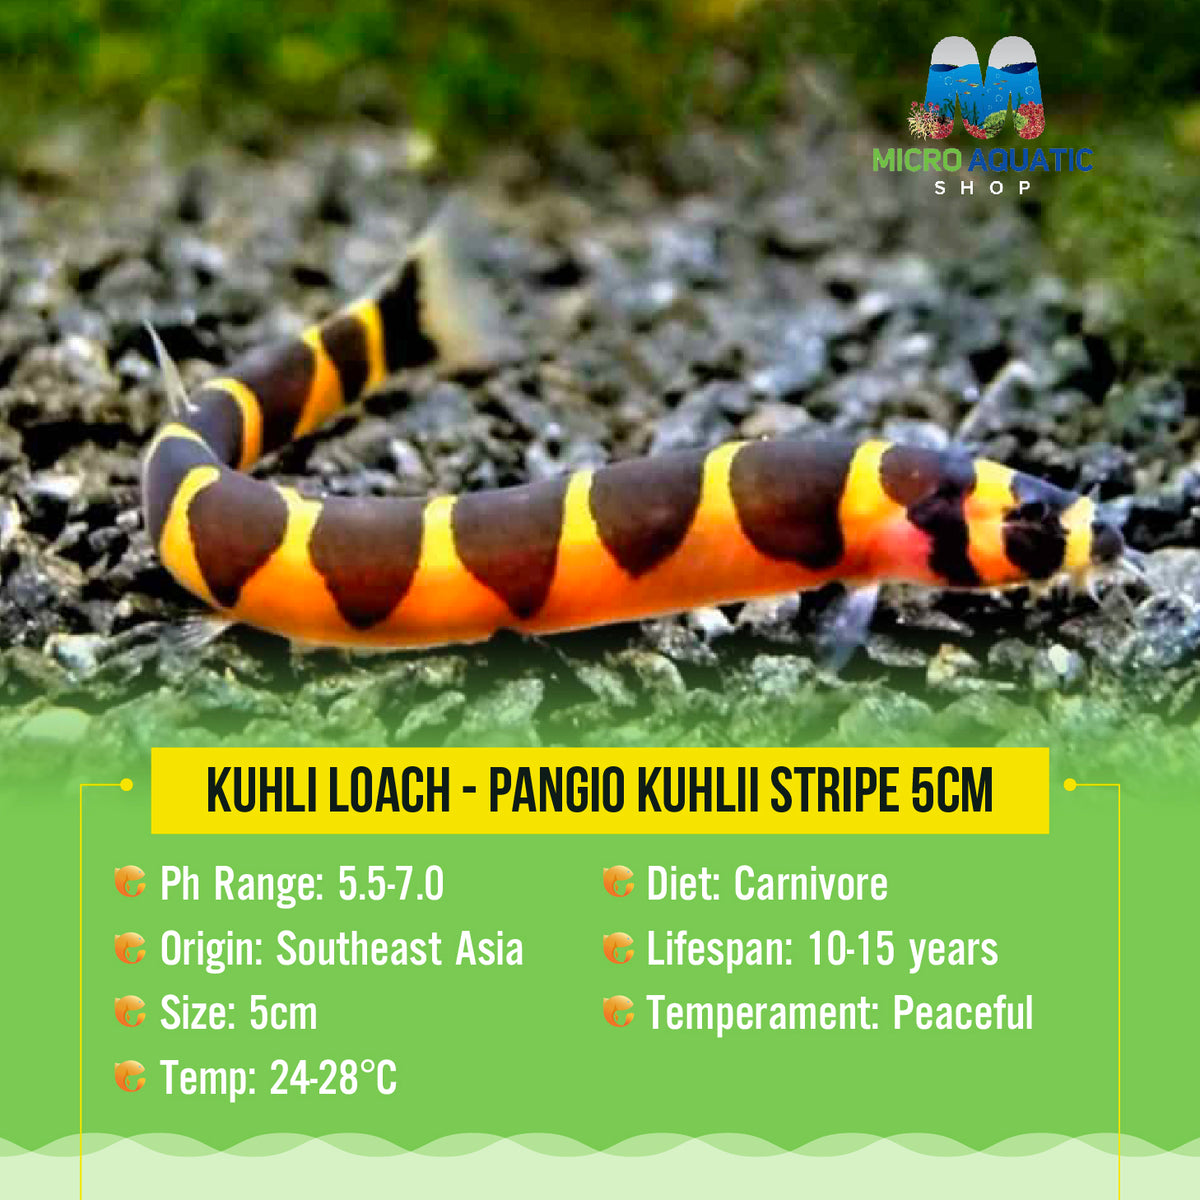 Kuhli Loach - Pangio Kuhlii Stripe 5cm